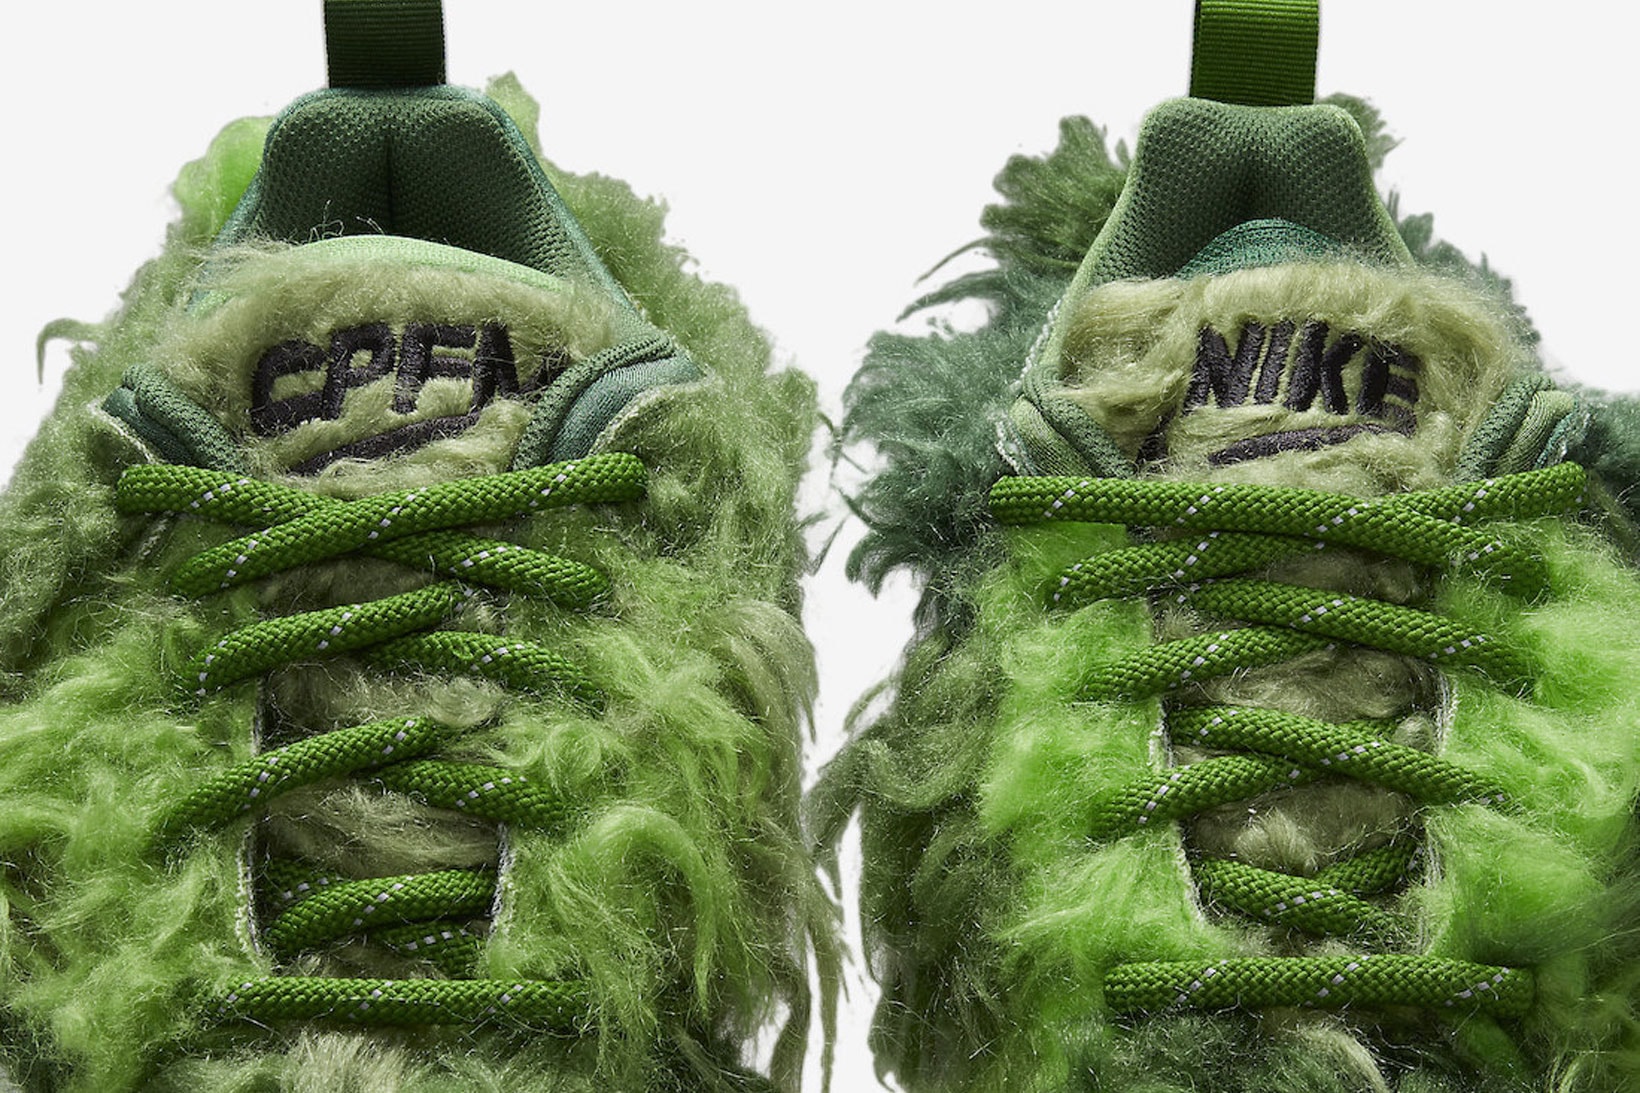 Cactus Plant Flea Market Nike Dunk Low "Overgrown" Grinch Release Date